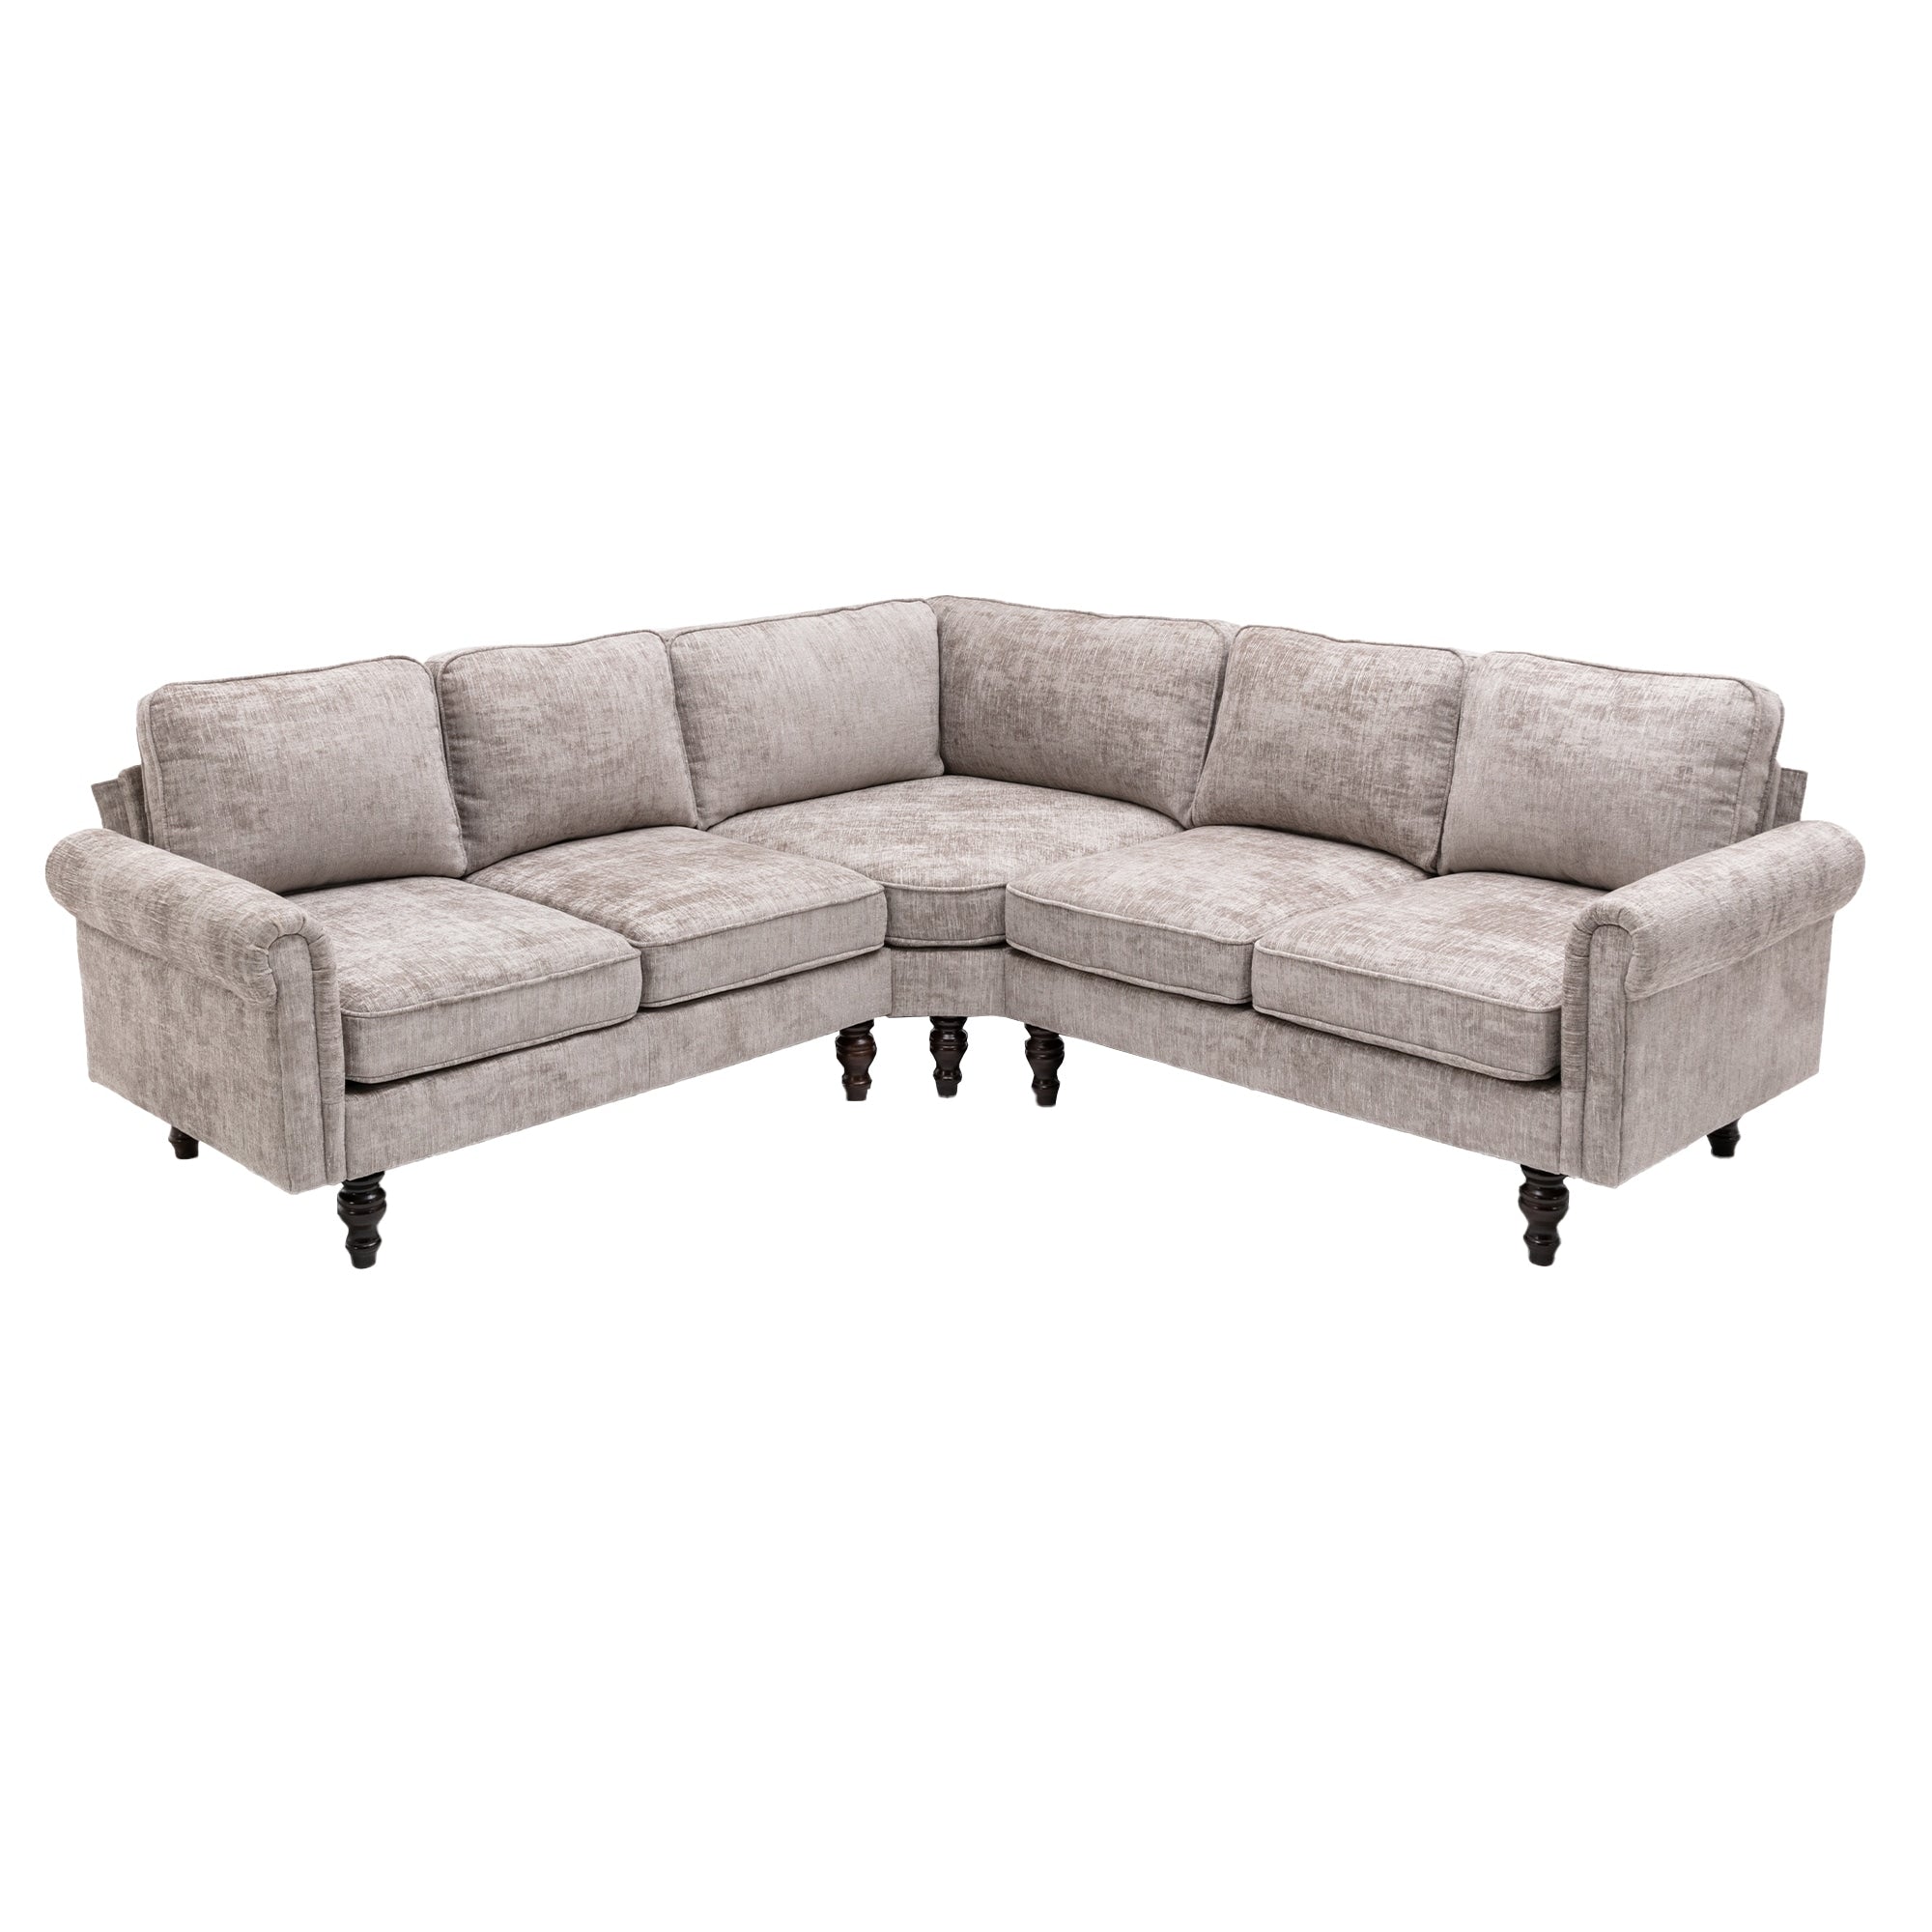 Living room sofa sectional sofa – Overstock